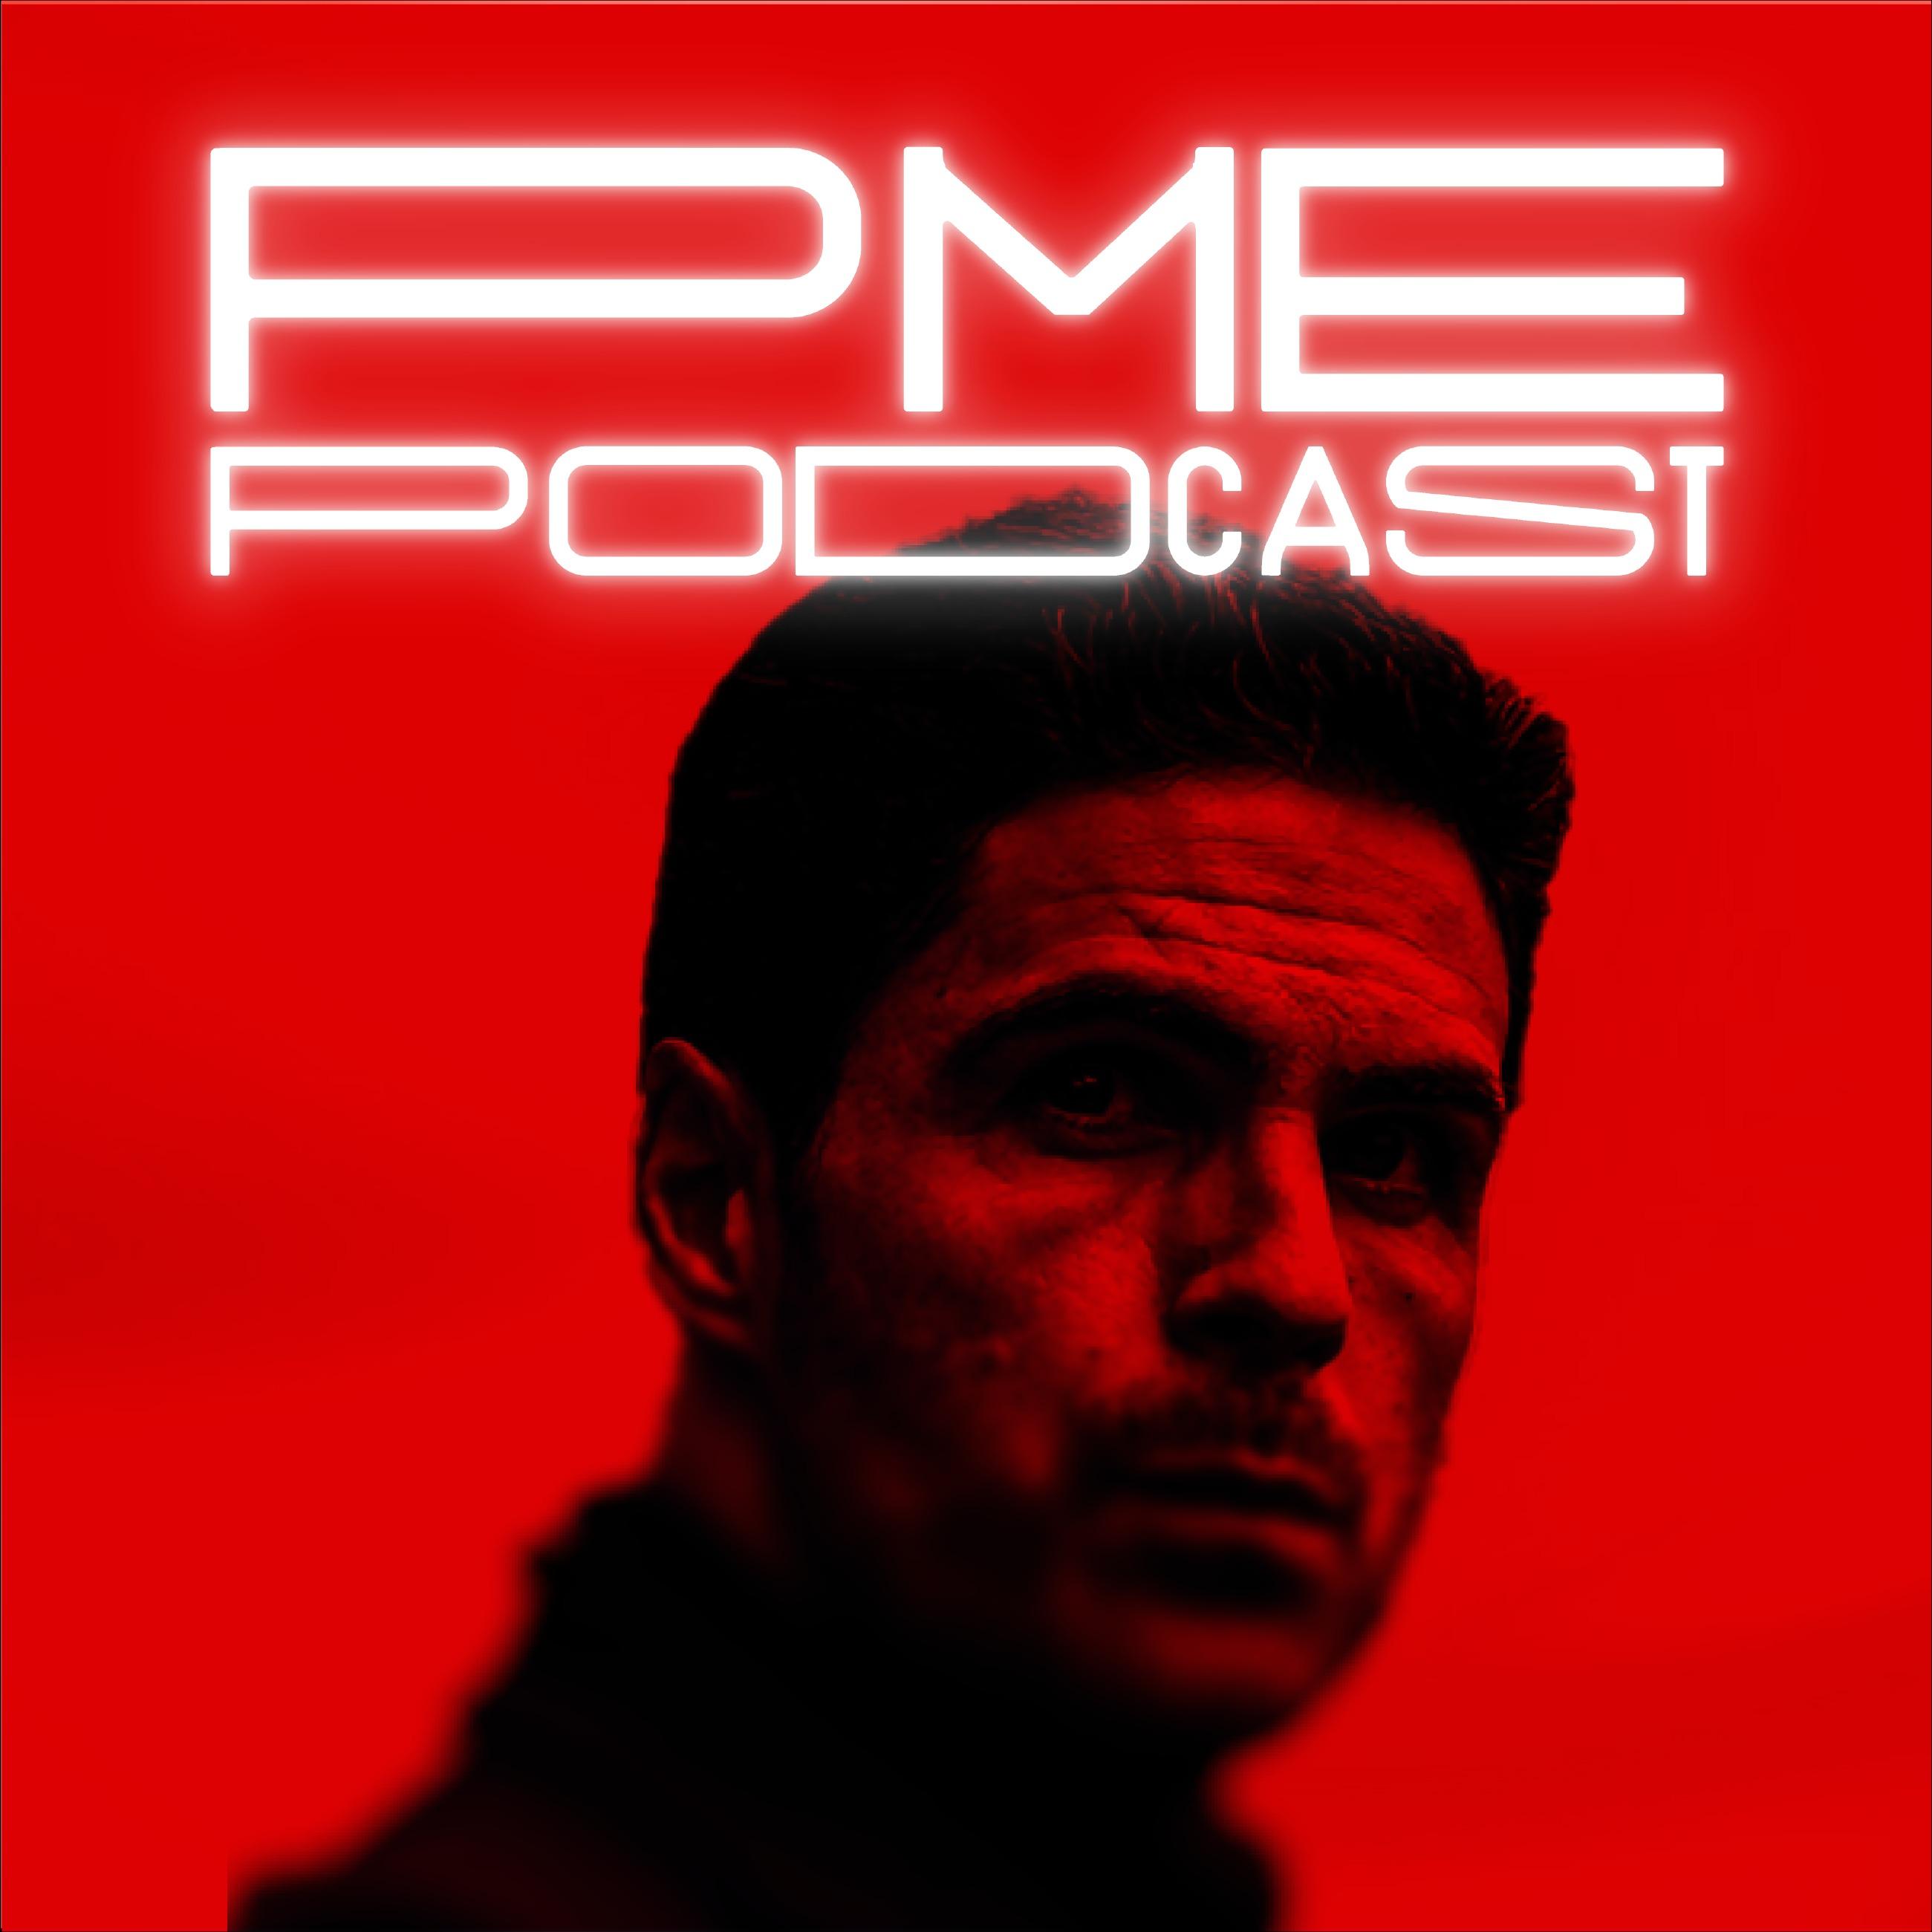 PME Podcast